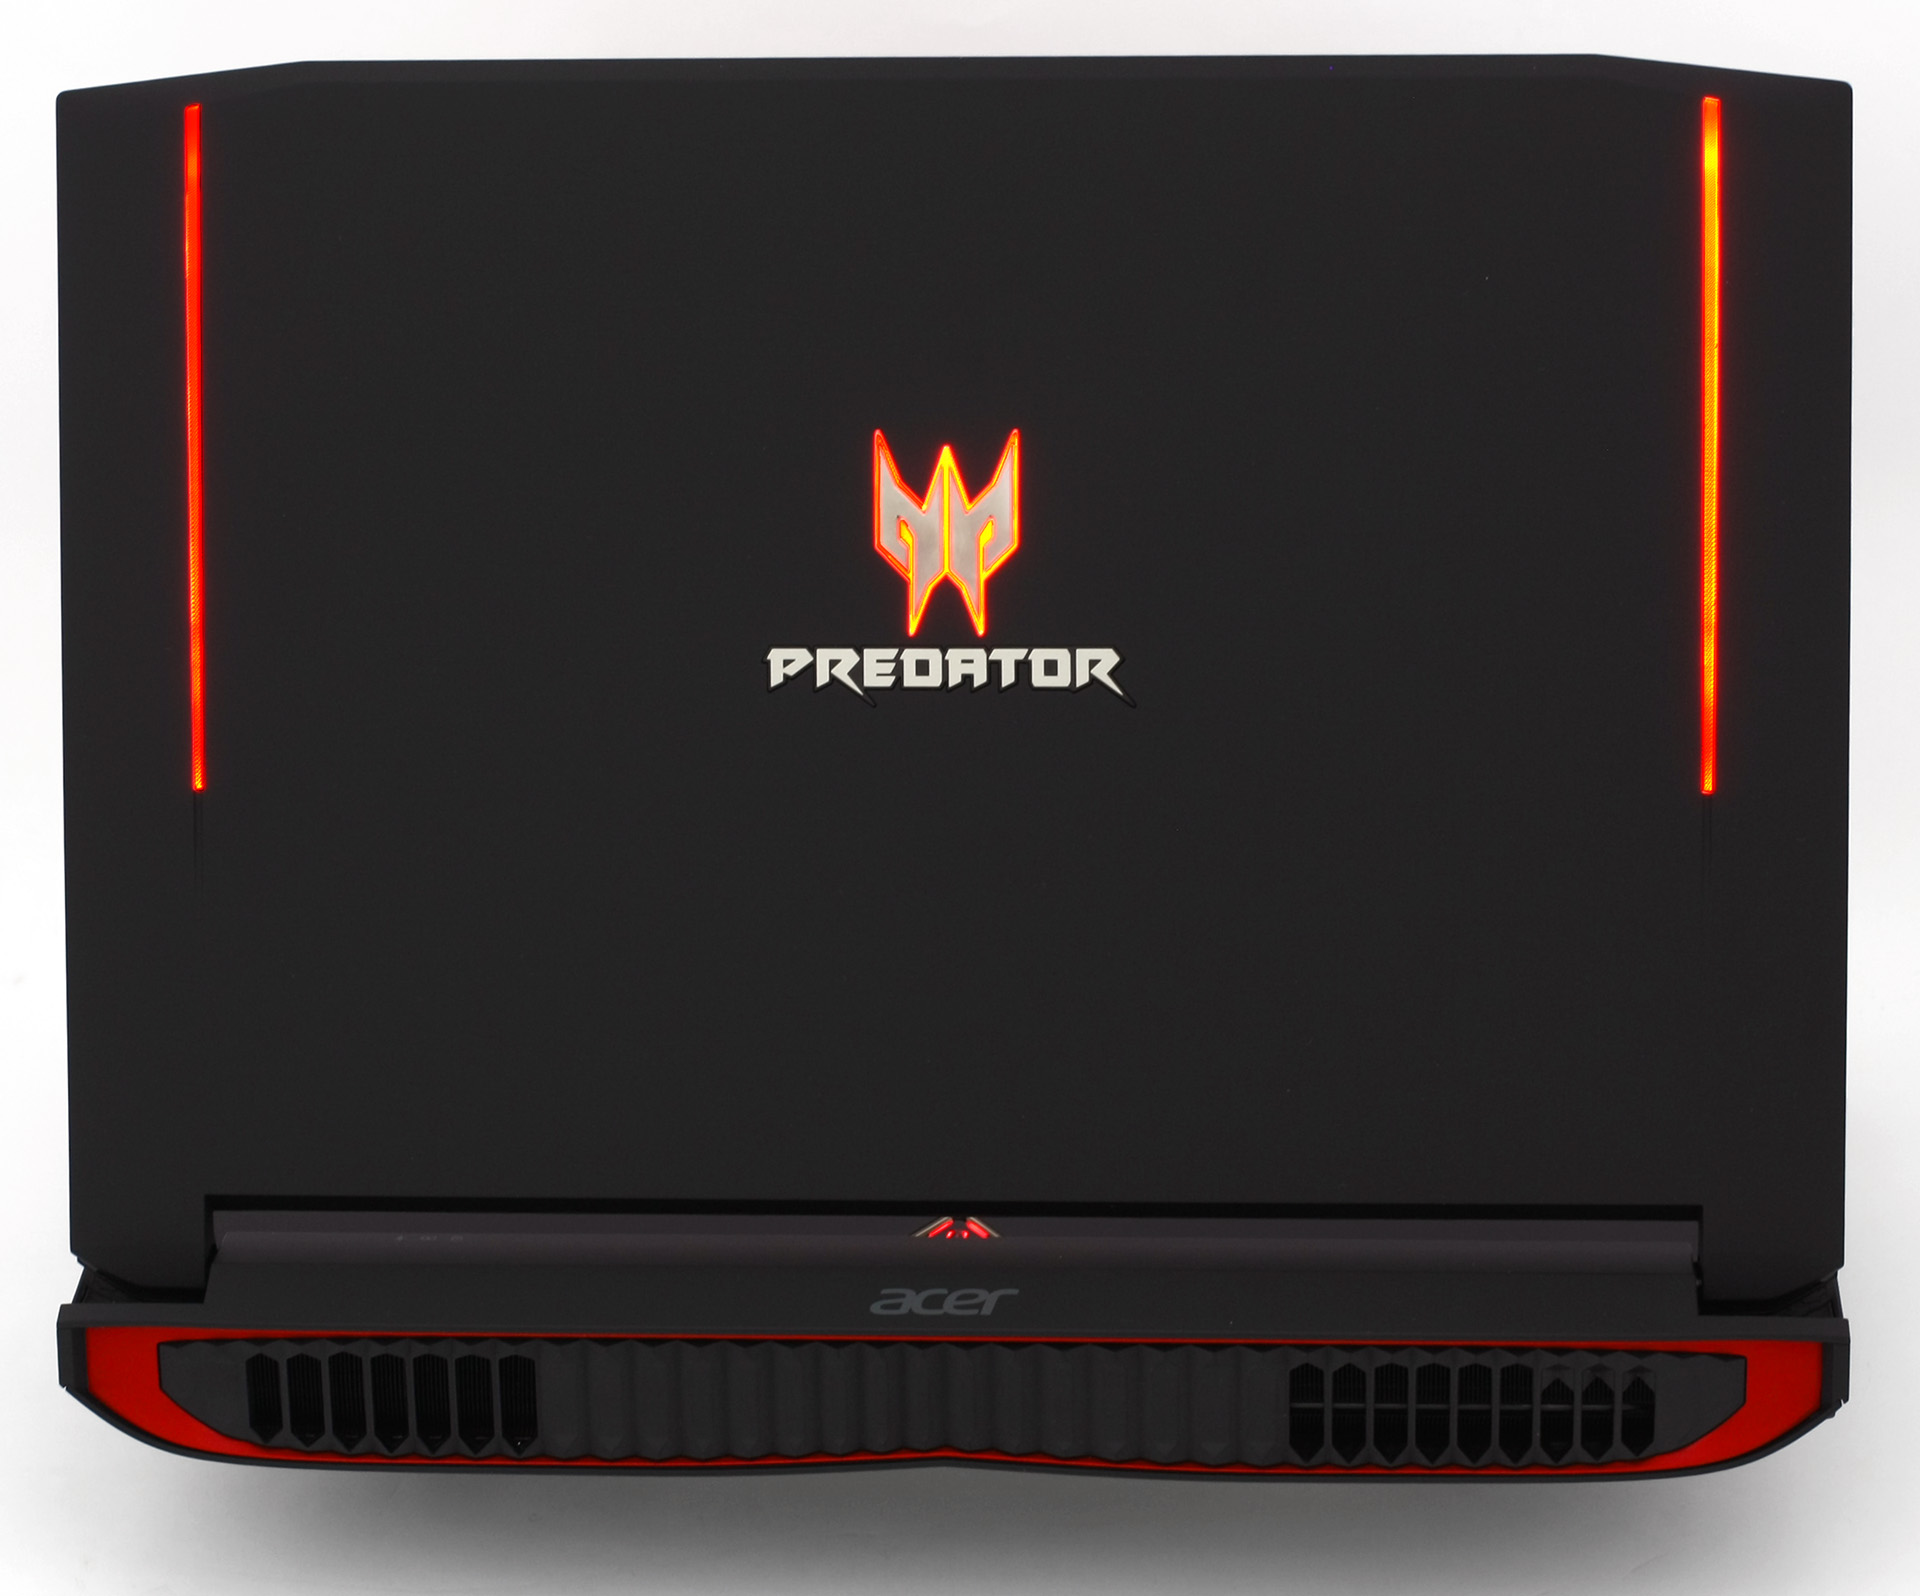 Acer Predator 17X (GX-791) review - desktop-like experience on a